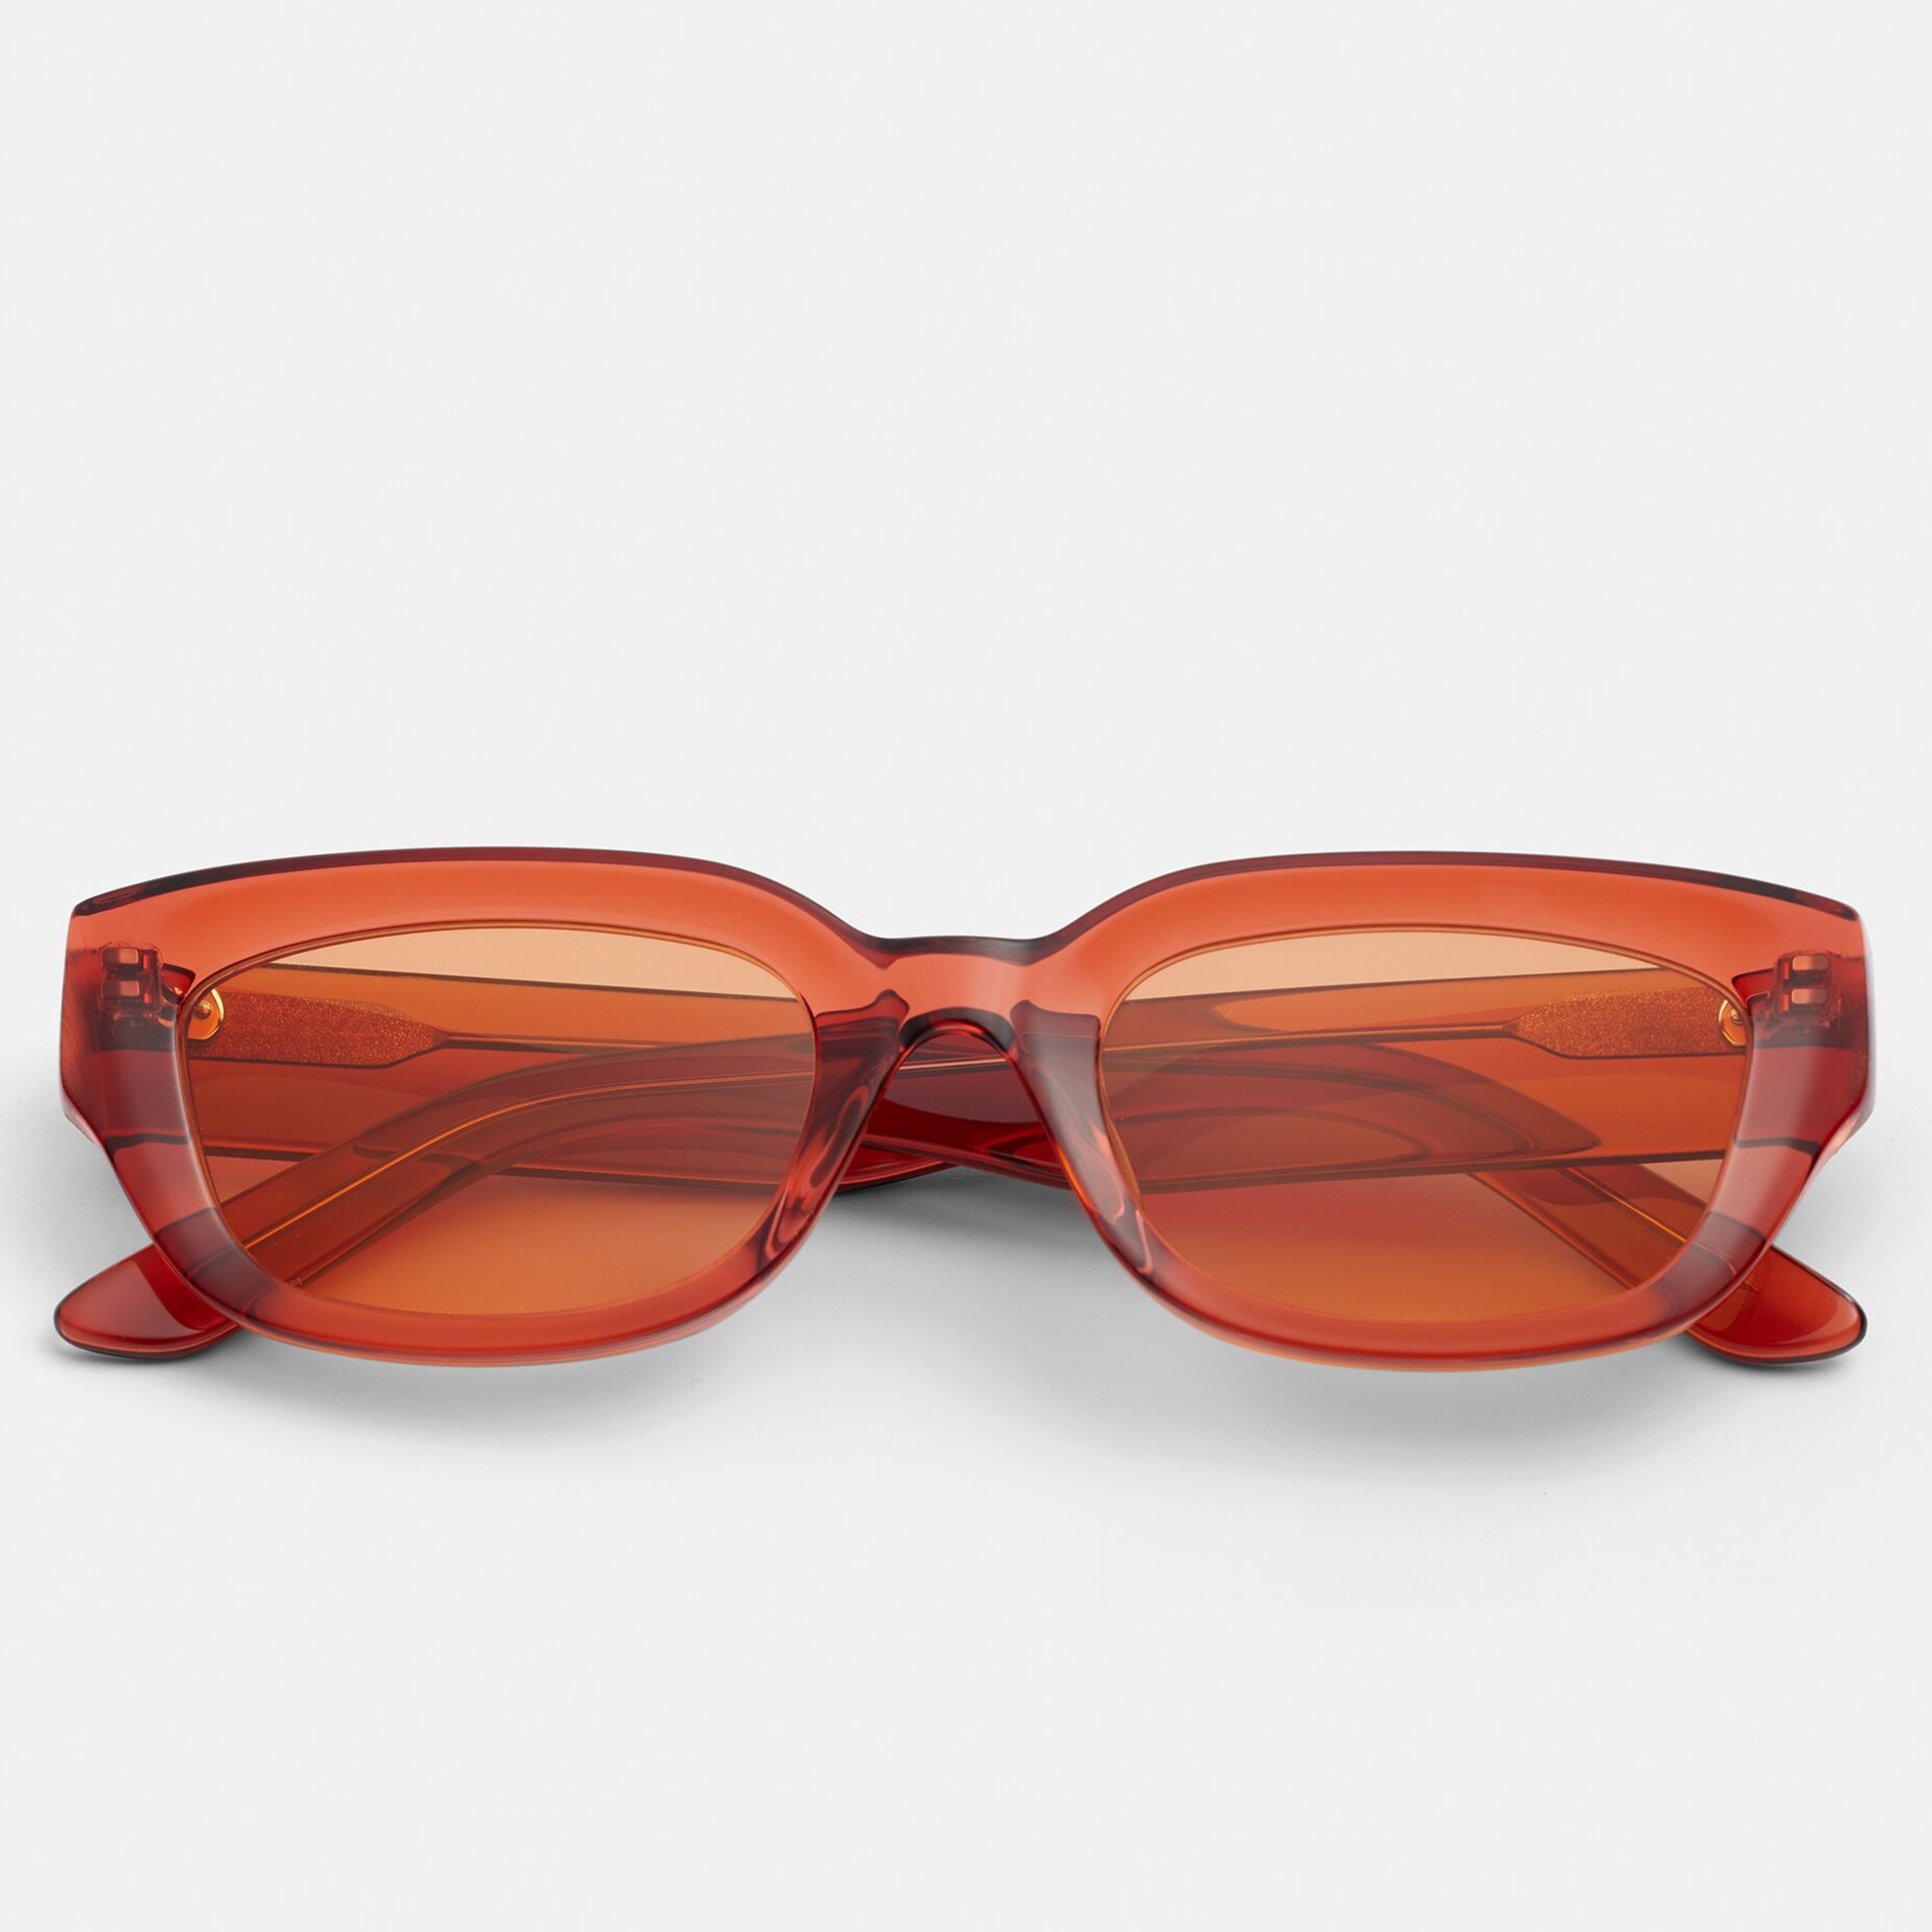 Ace & Tate Sunglasses | rectangle Renew bio acetate in Red